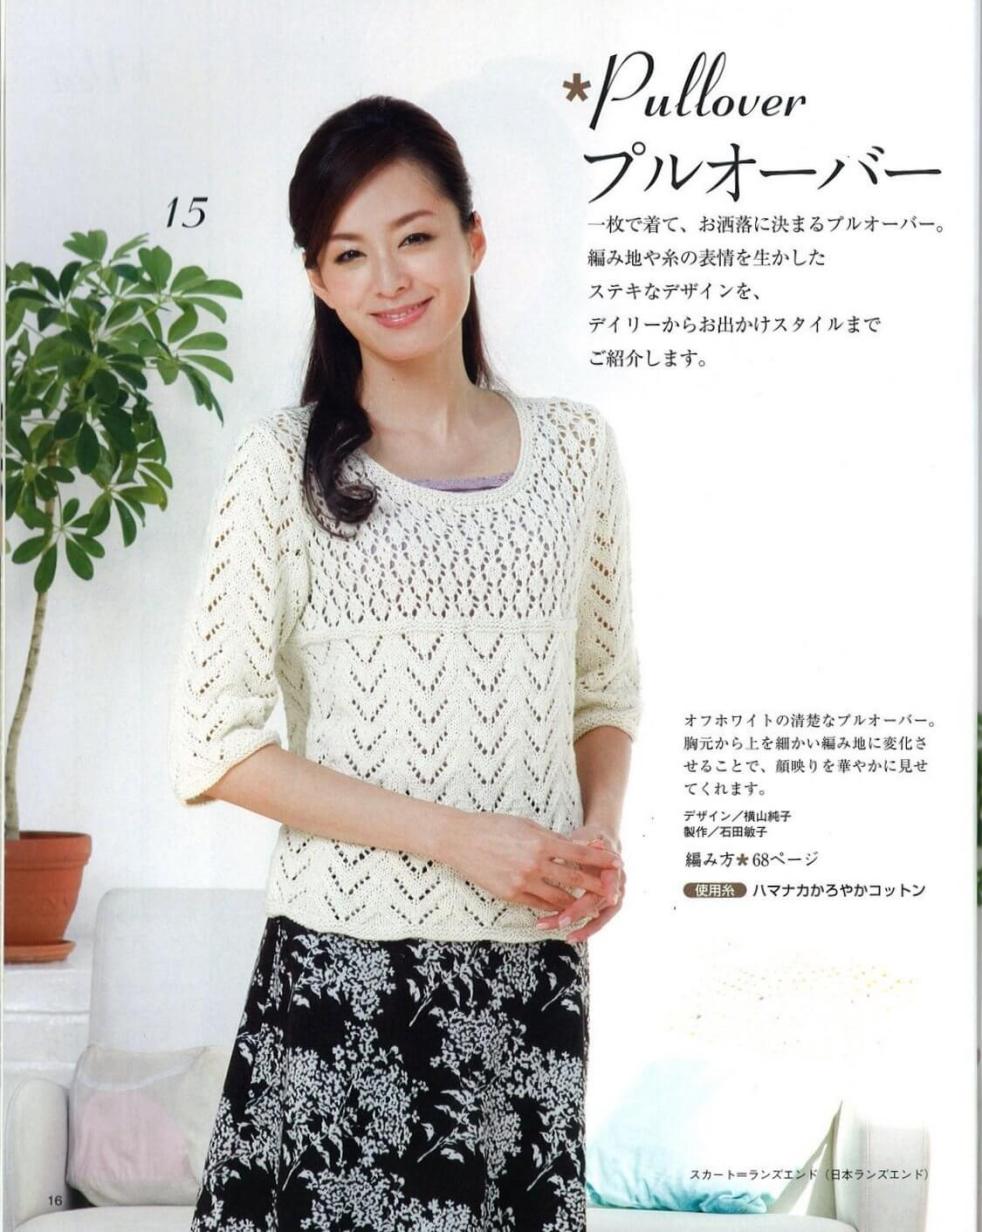 Elegant pullover sweater knitting pattern